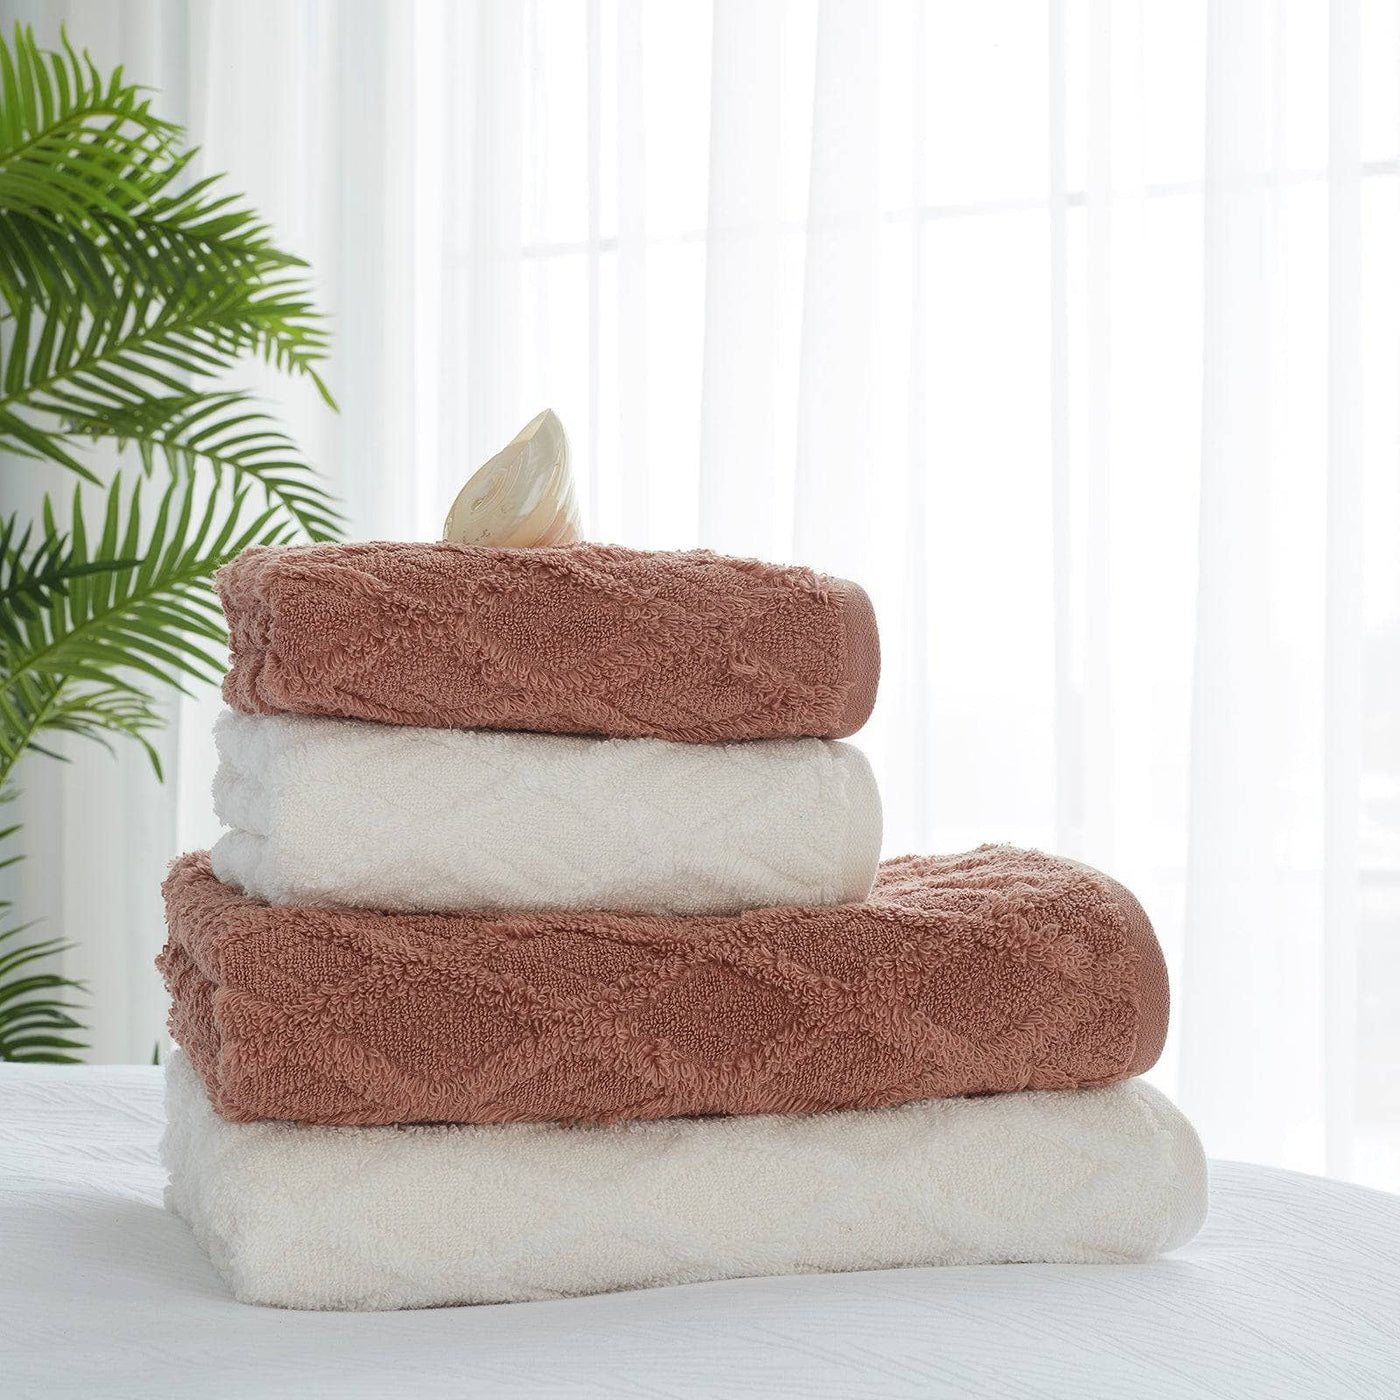 Judith Diamond Set of 2 Textured 100% Turkish Cotton Hand Towels, Cinnamon Hand Towels sazy.com